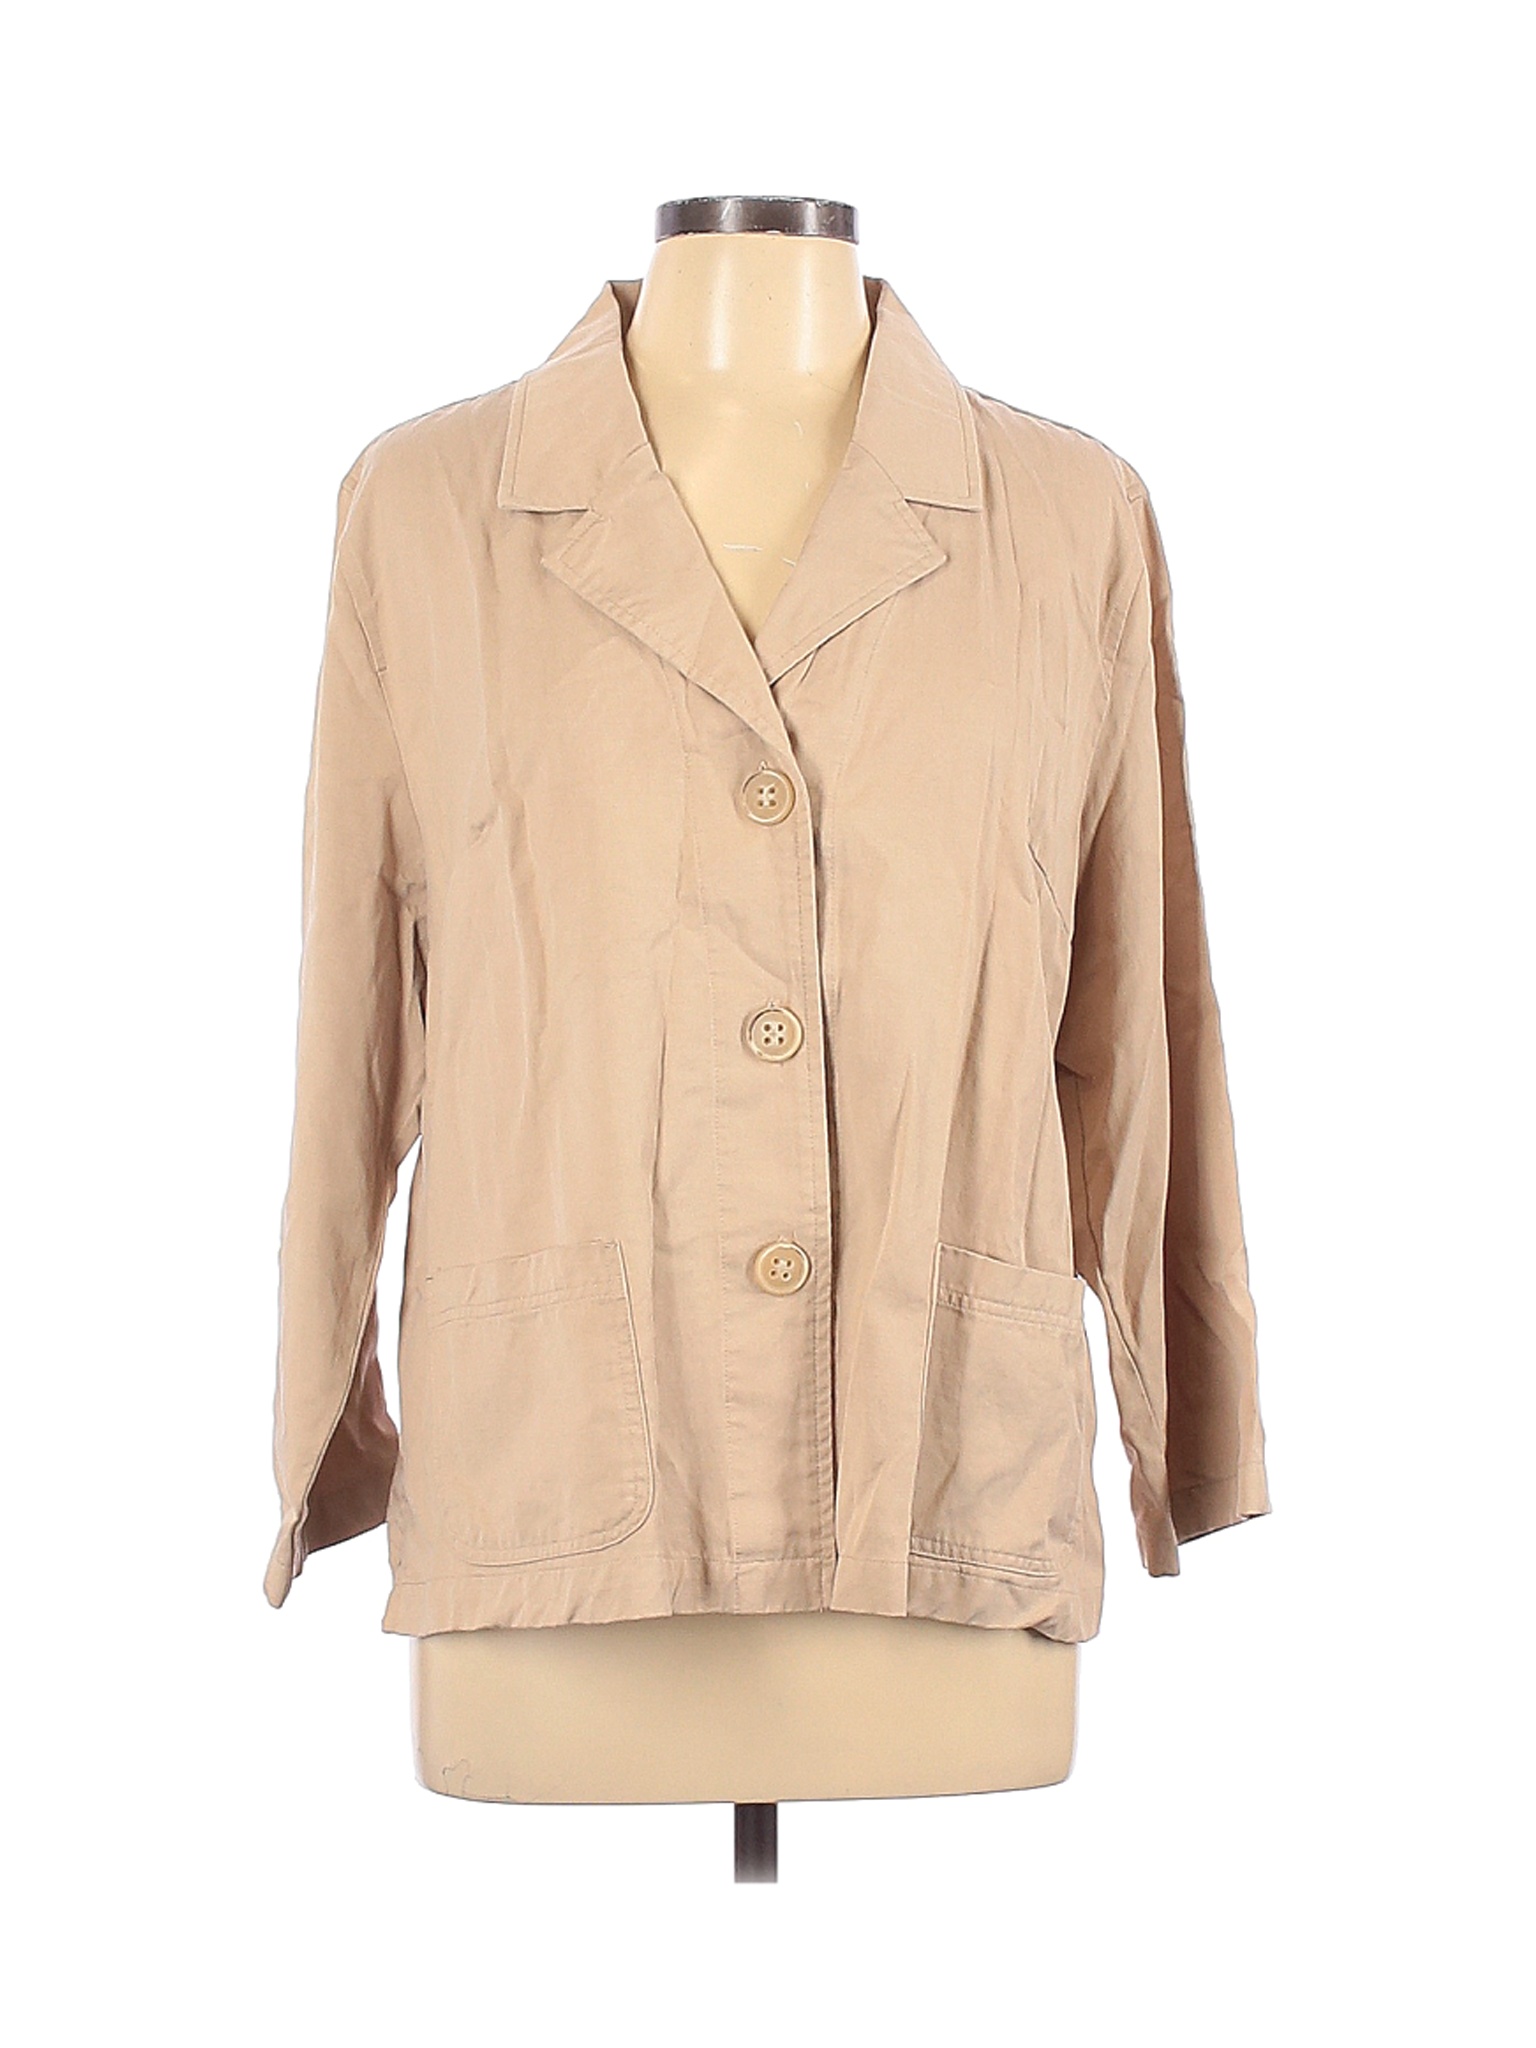 Appleseeds Women Brown Jacket XL Petites | eBay